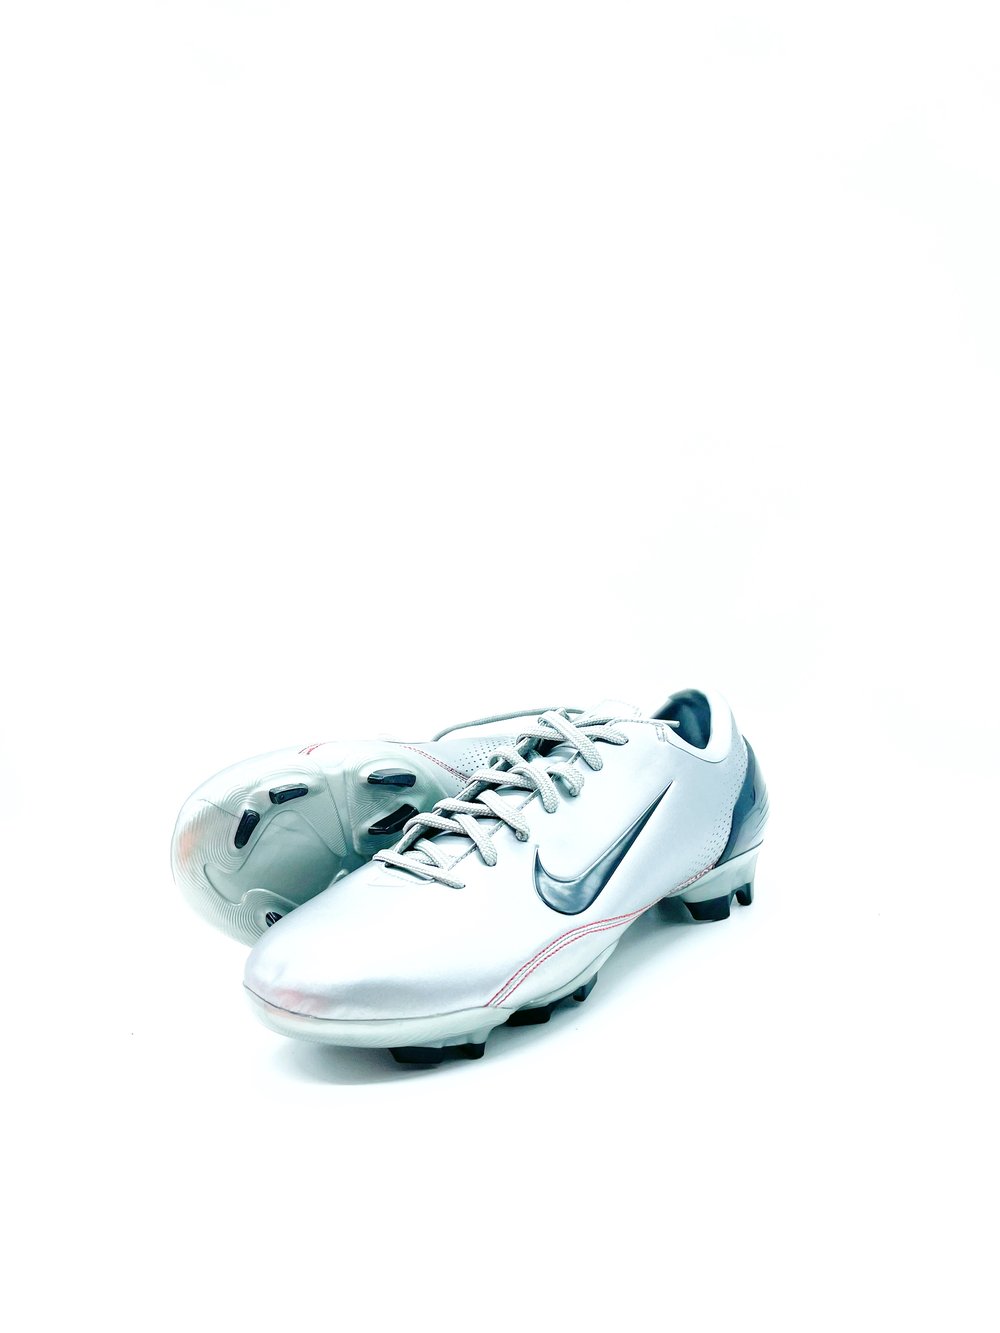 Image of Nike Vapor Talaria FG 